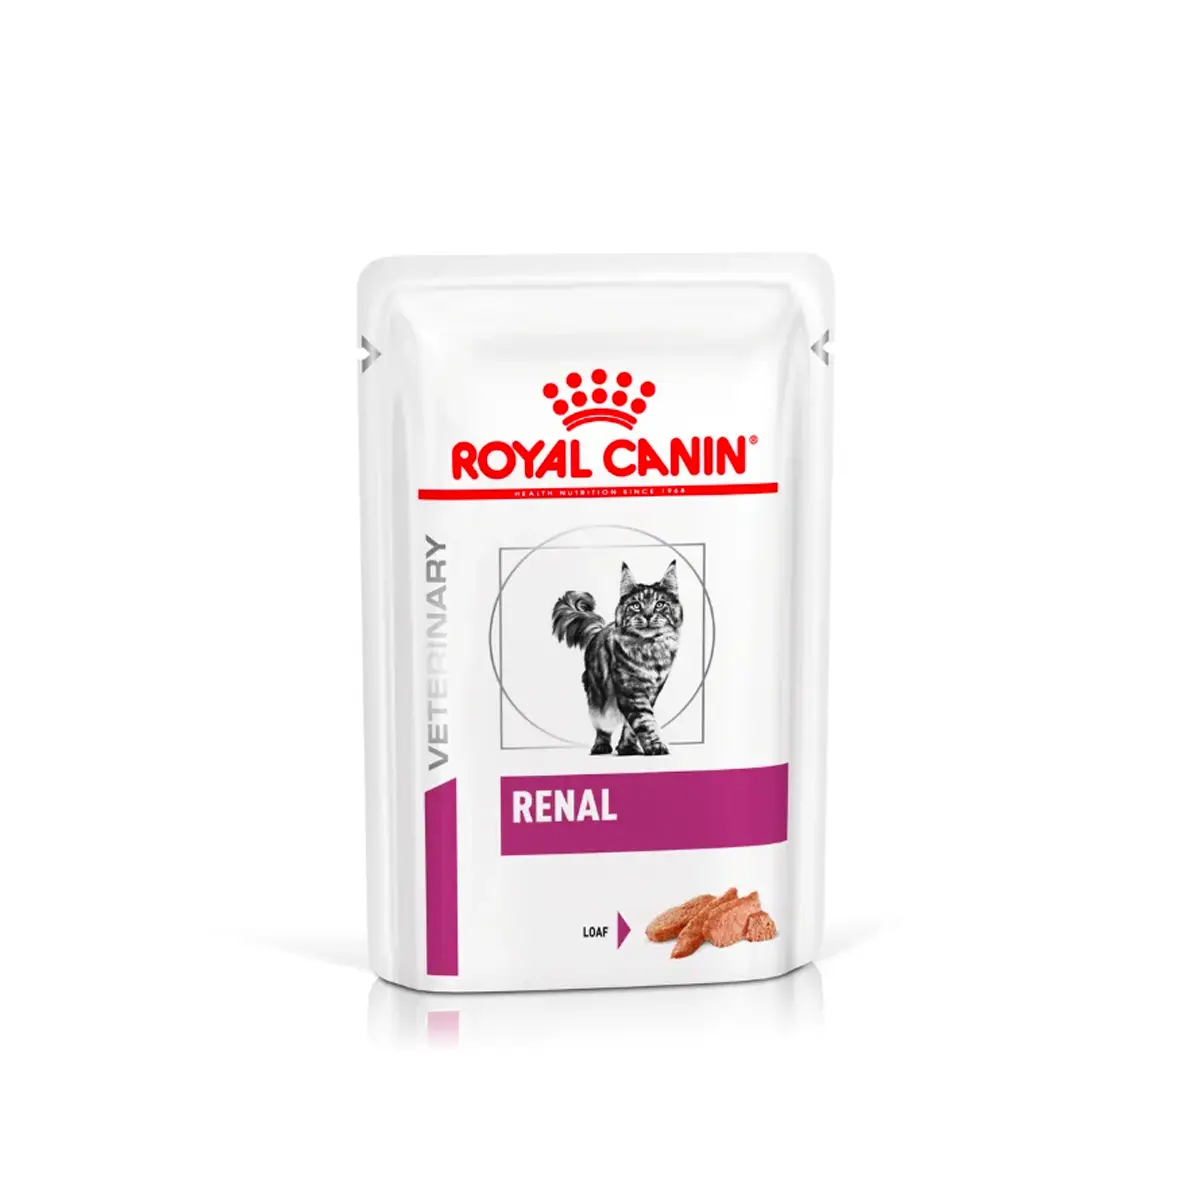 Royal Canin - Feline Renal Loaf Pouch 85g